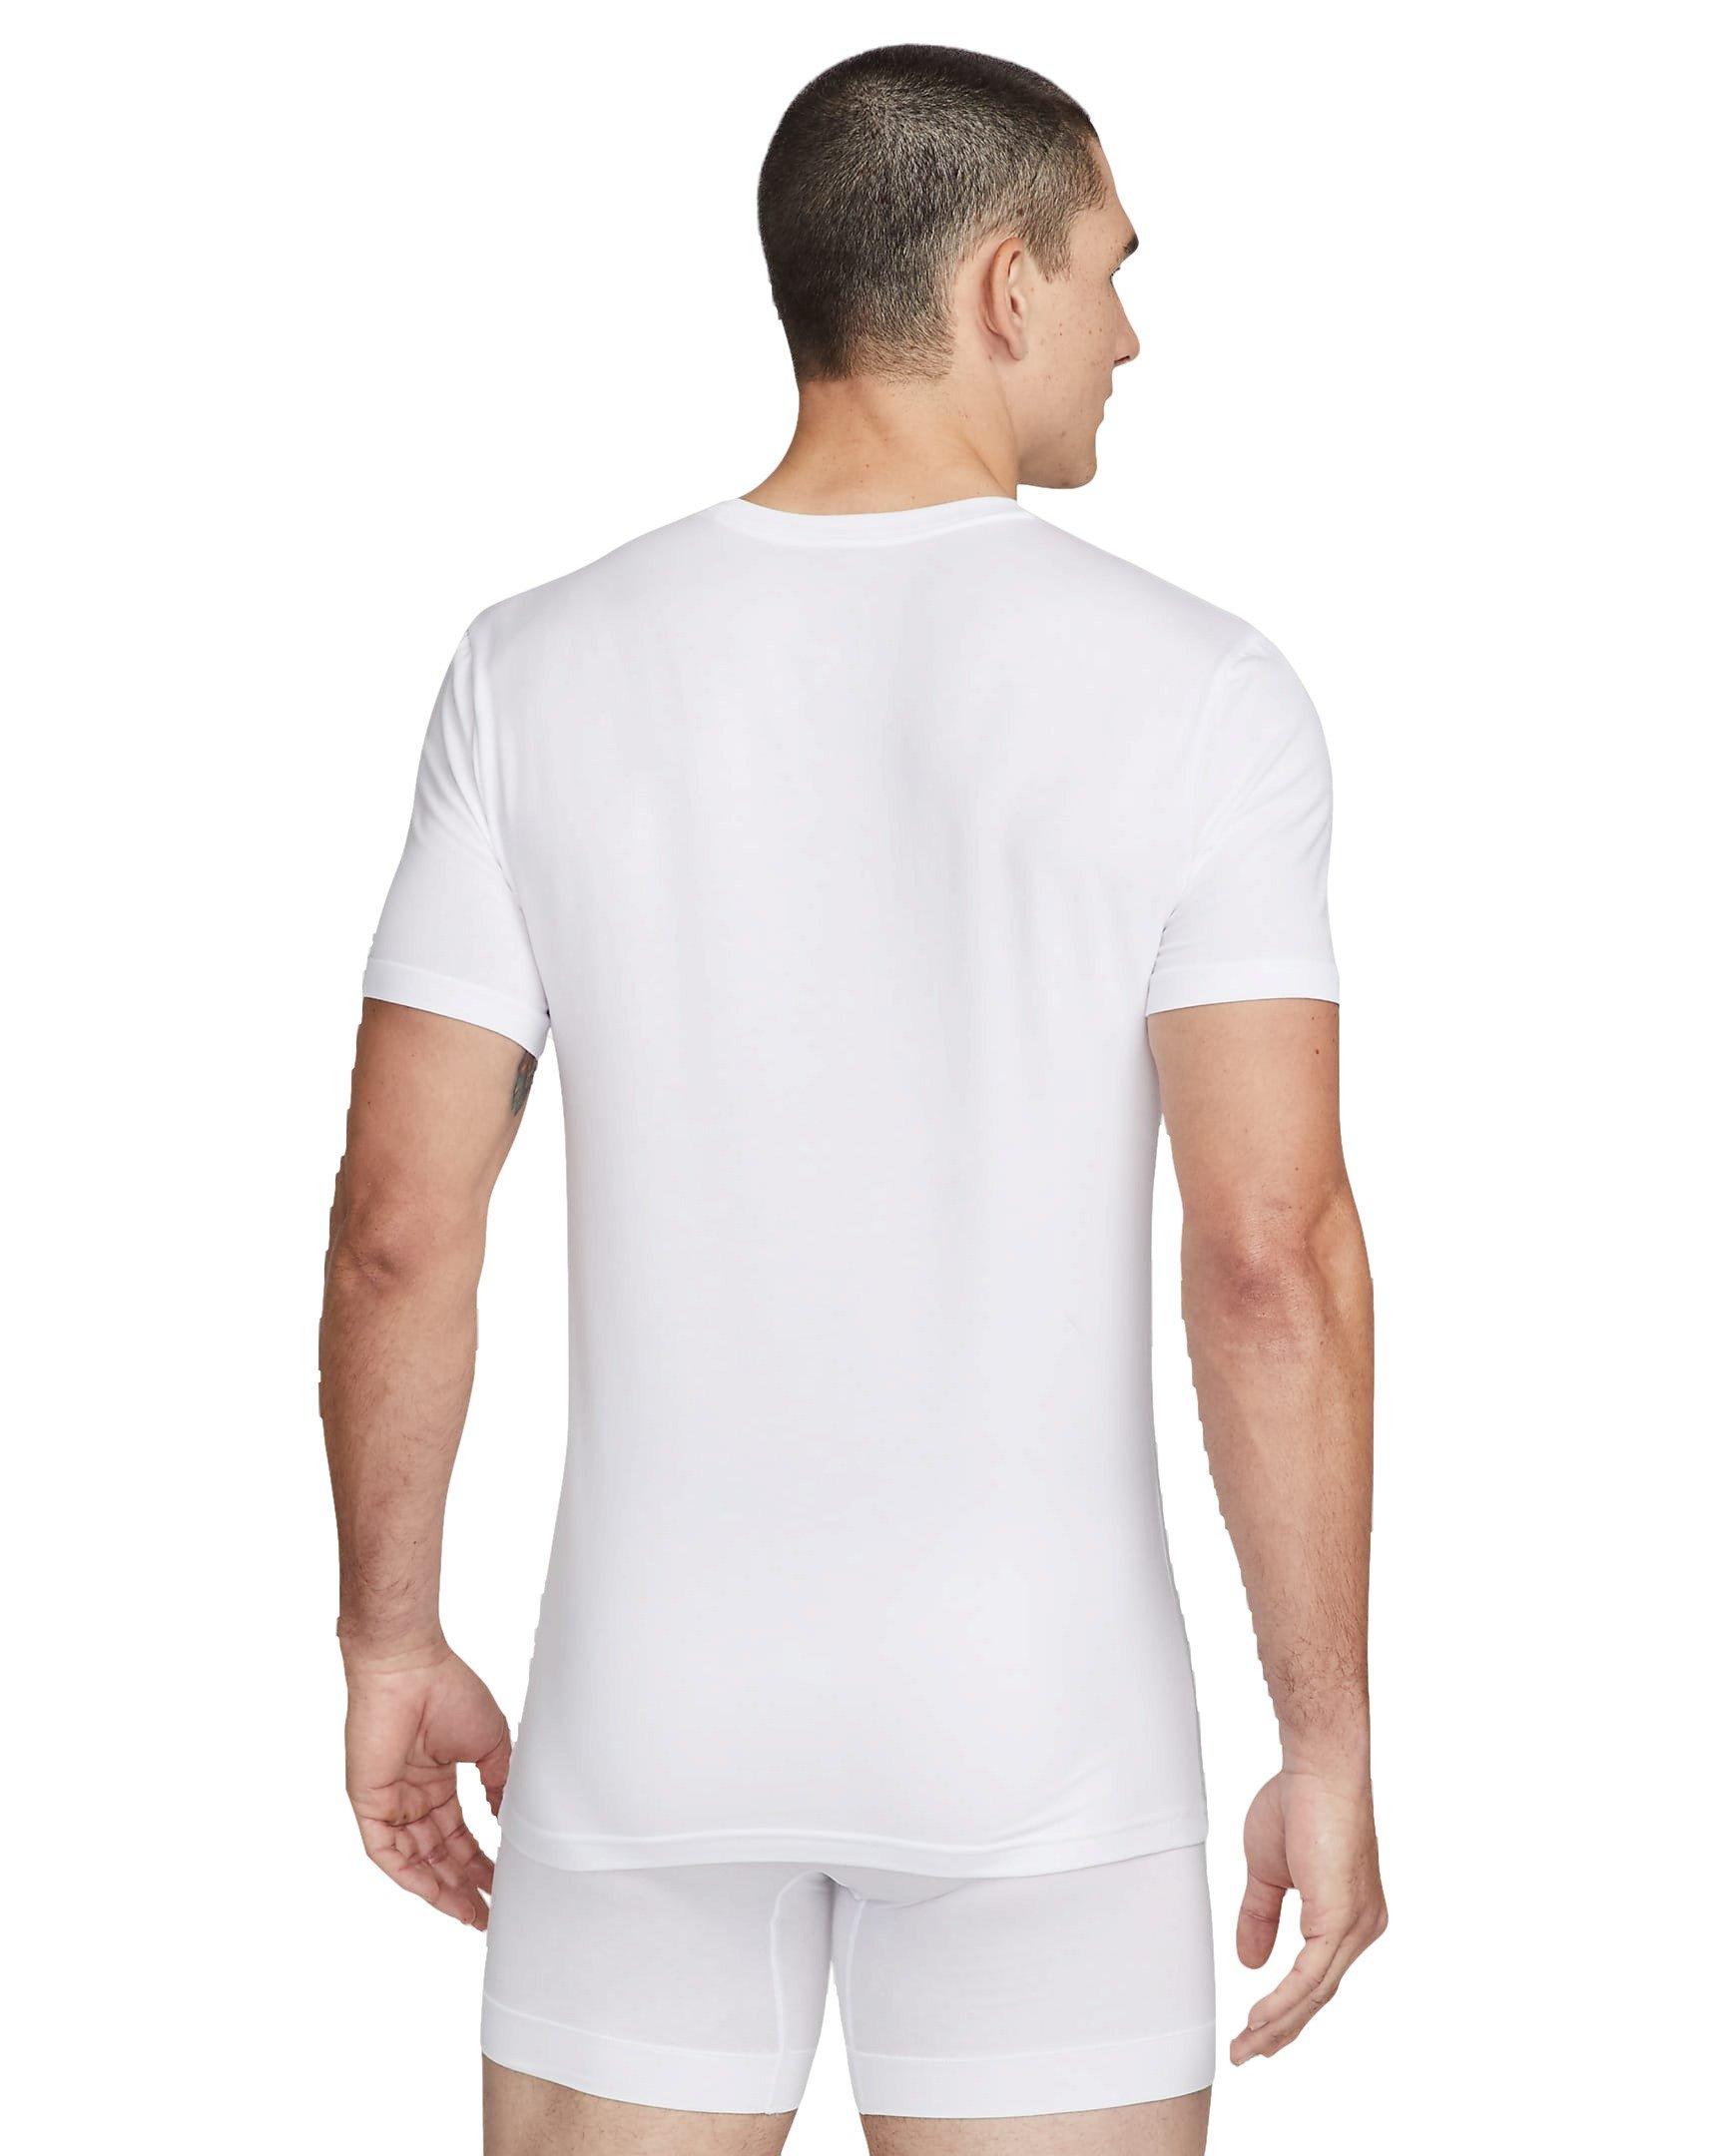 Nike Dri-FIT Essential Cotton Stretch Slim Fit Undershirt (2-Pack